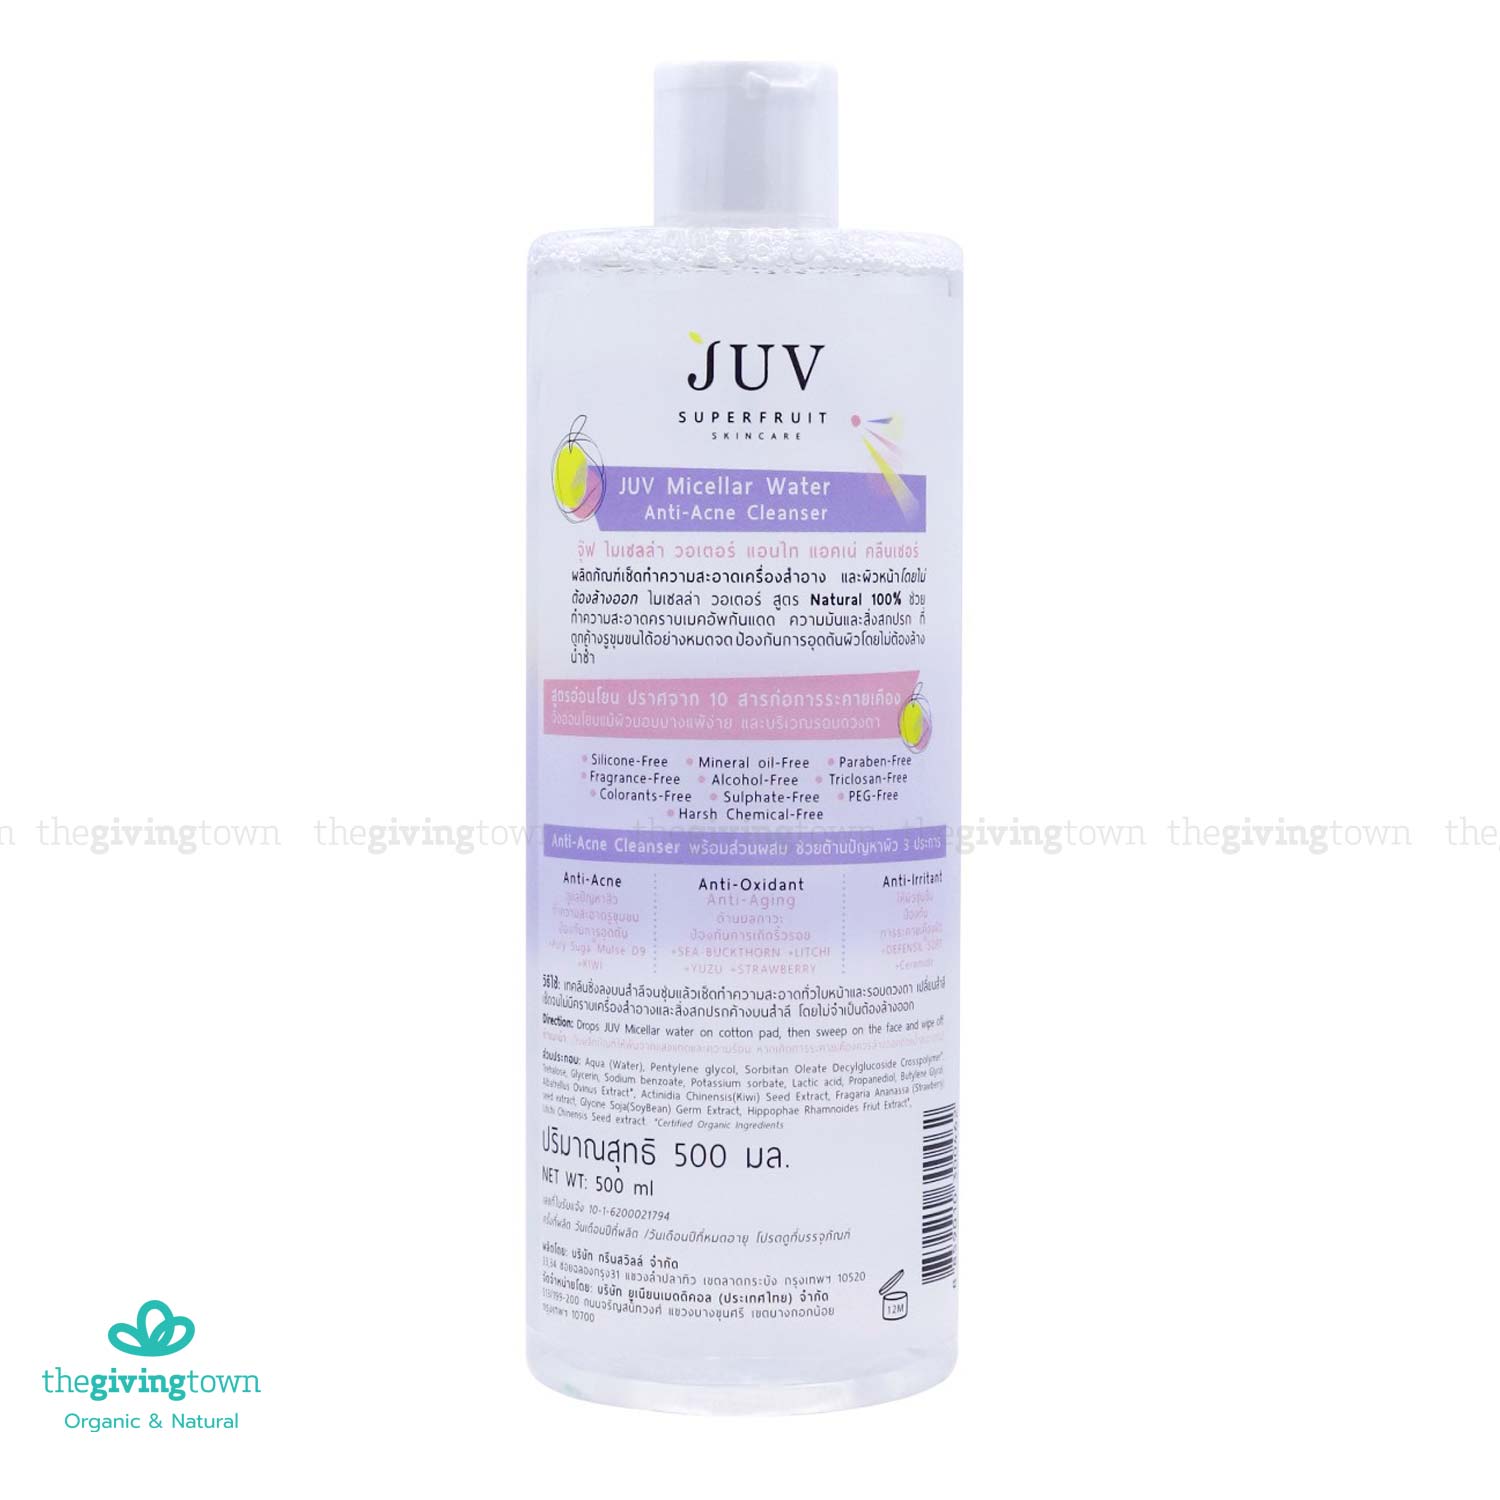 JUV Superfruit Micellar Water Anti-Acne ไมเซลล่า วอเตอร์ ผลิตภัณฑ์เช็ดทำความสะอาดเครื่องสำอางและผิวหน้า ไมเซลล่าวอเตอร์ สูตร Natural 100% JUV Micella ไมเซล่า  กลิ่น Not Specifiedปริมาณ (มล.) 500